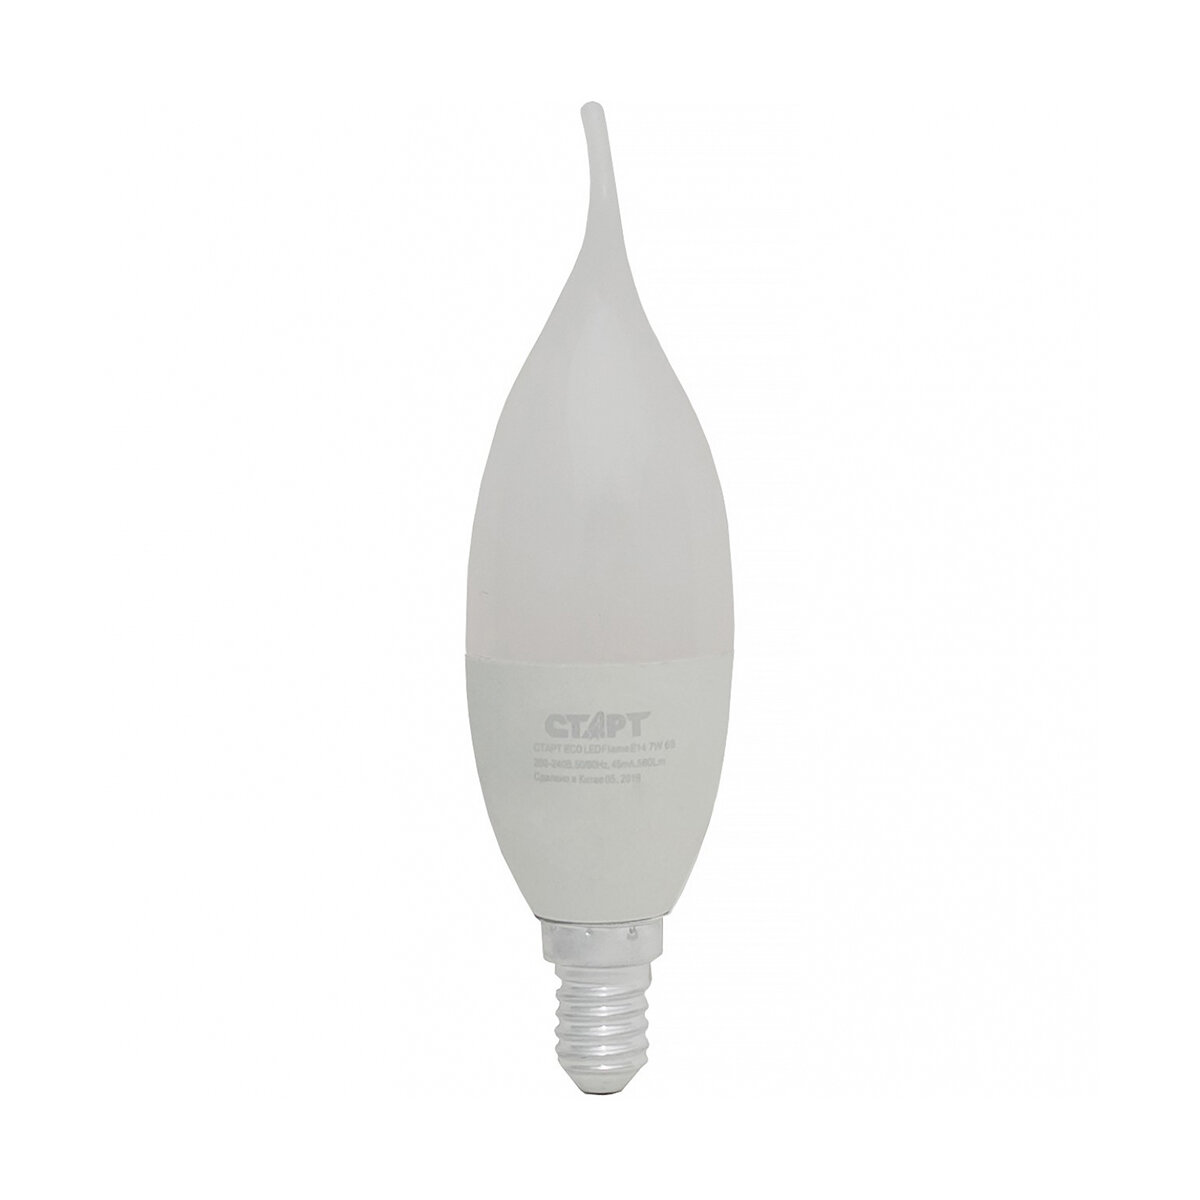 Xuguang Lighting Co.,ltd Лампа светодиодная LED Старт ECO Свеча на ветру, E14, 7 Вт, 6500 K, холодный белый свет